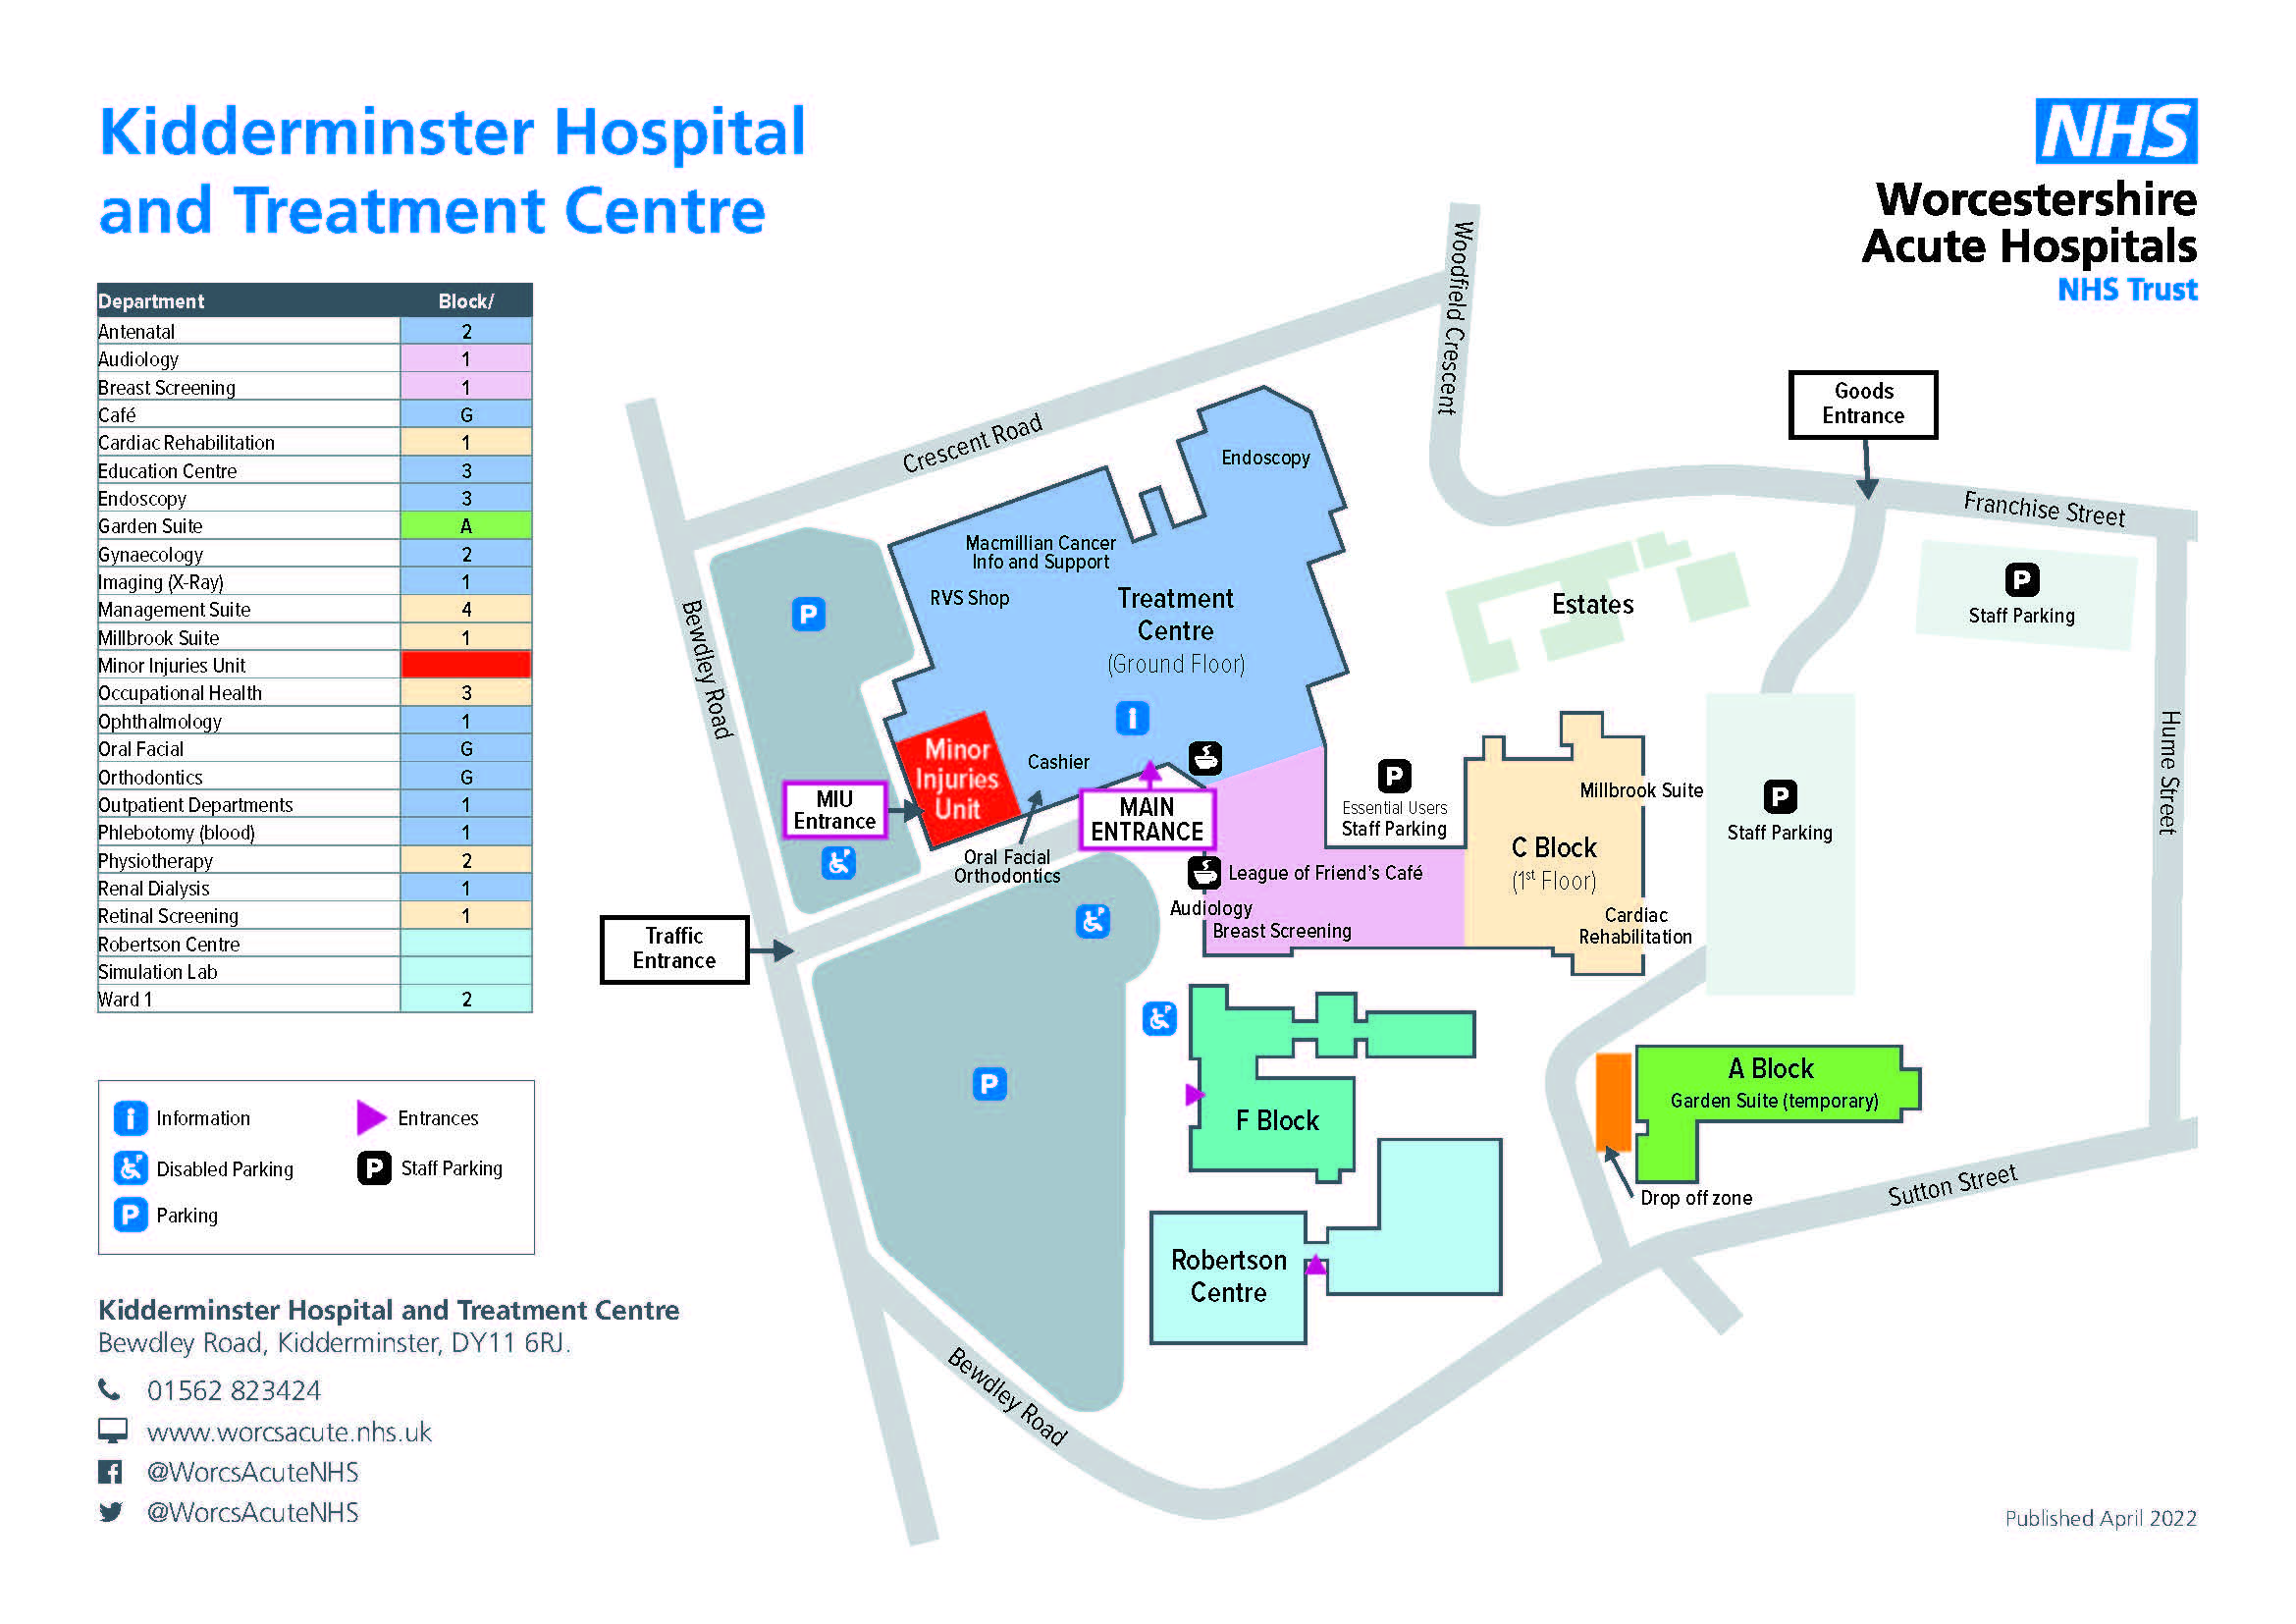 Kidderminster map for website April 2022